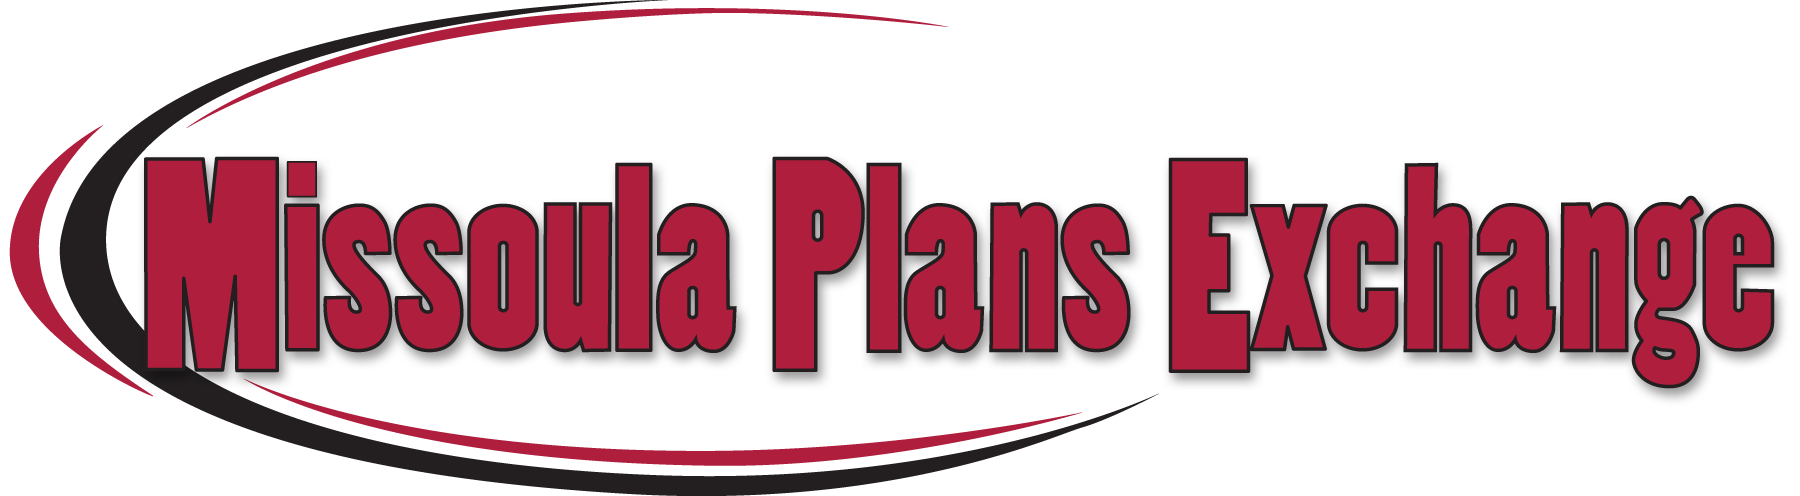 Missoula Plans Exchange Logo